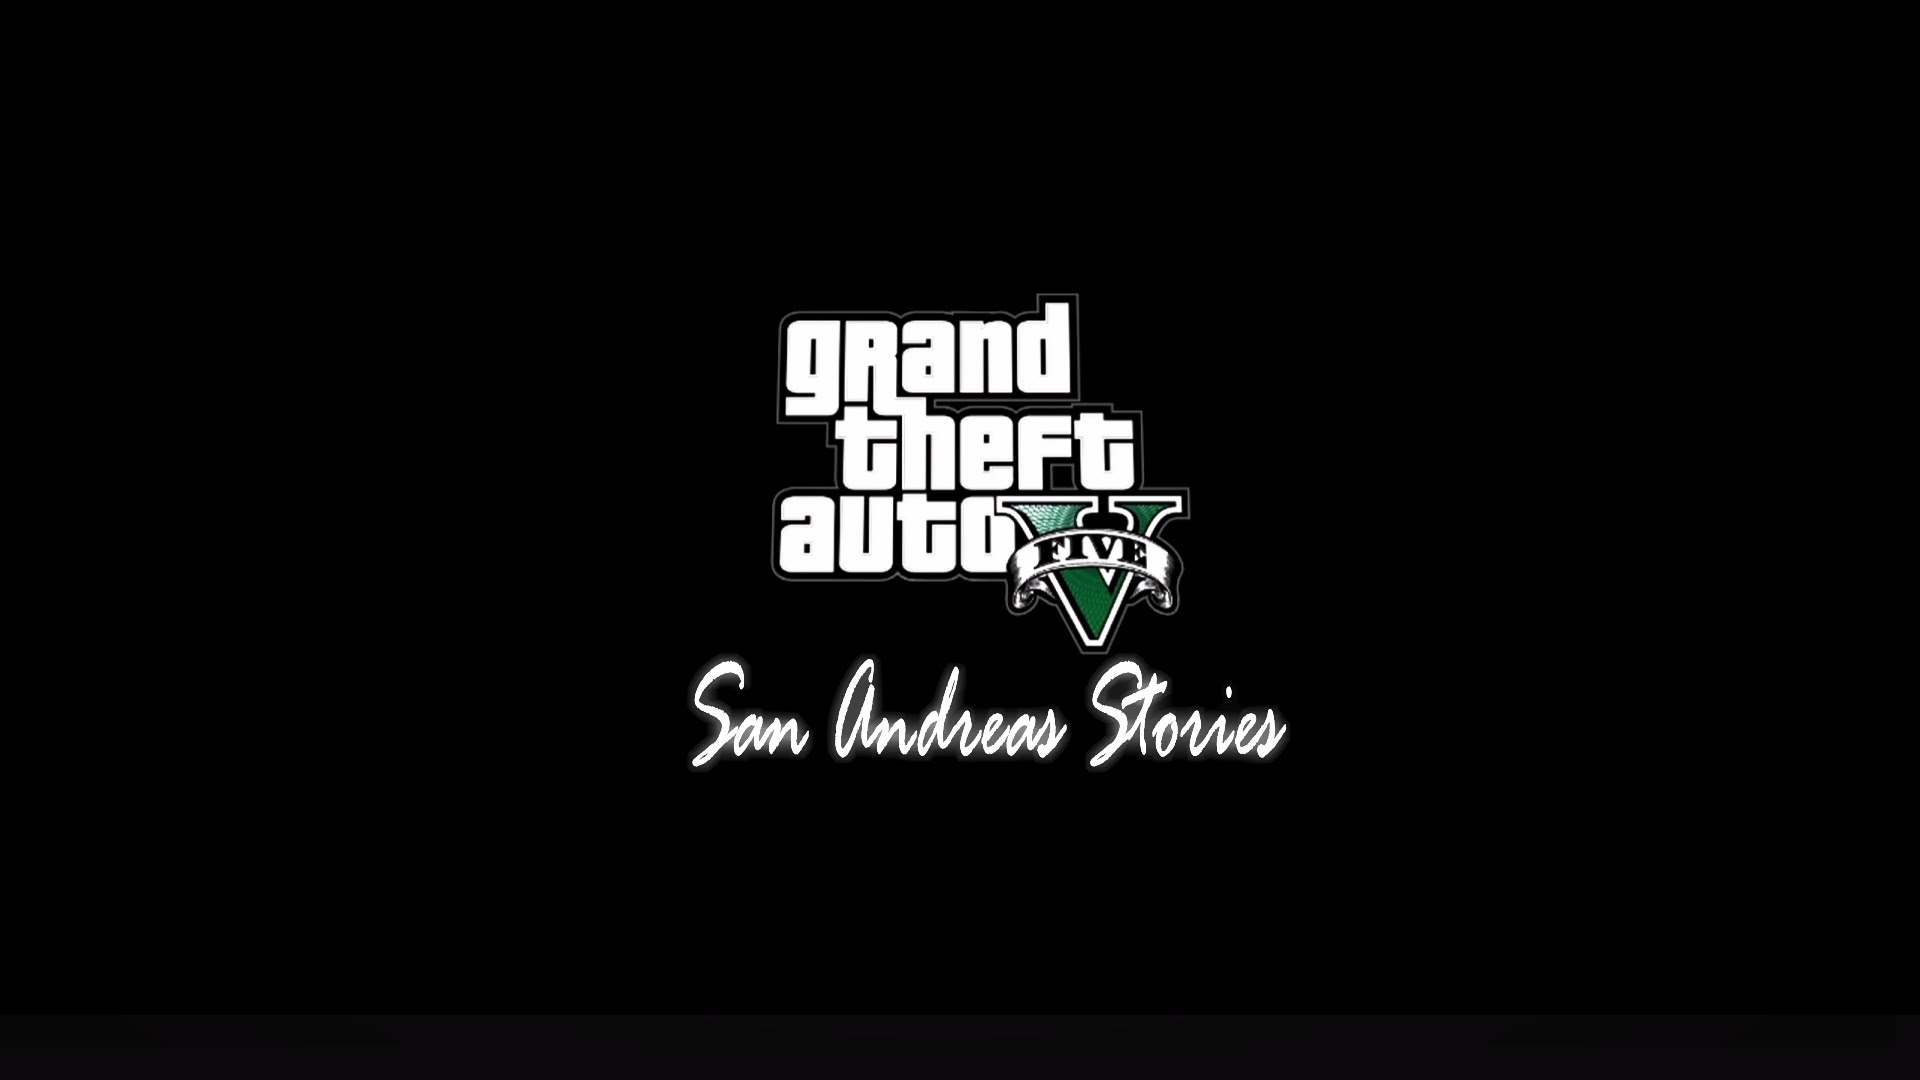 Grand Theft Auto: San Andreas Stories. Grand Theft Auto Fanon